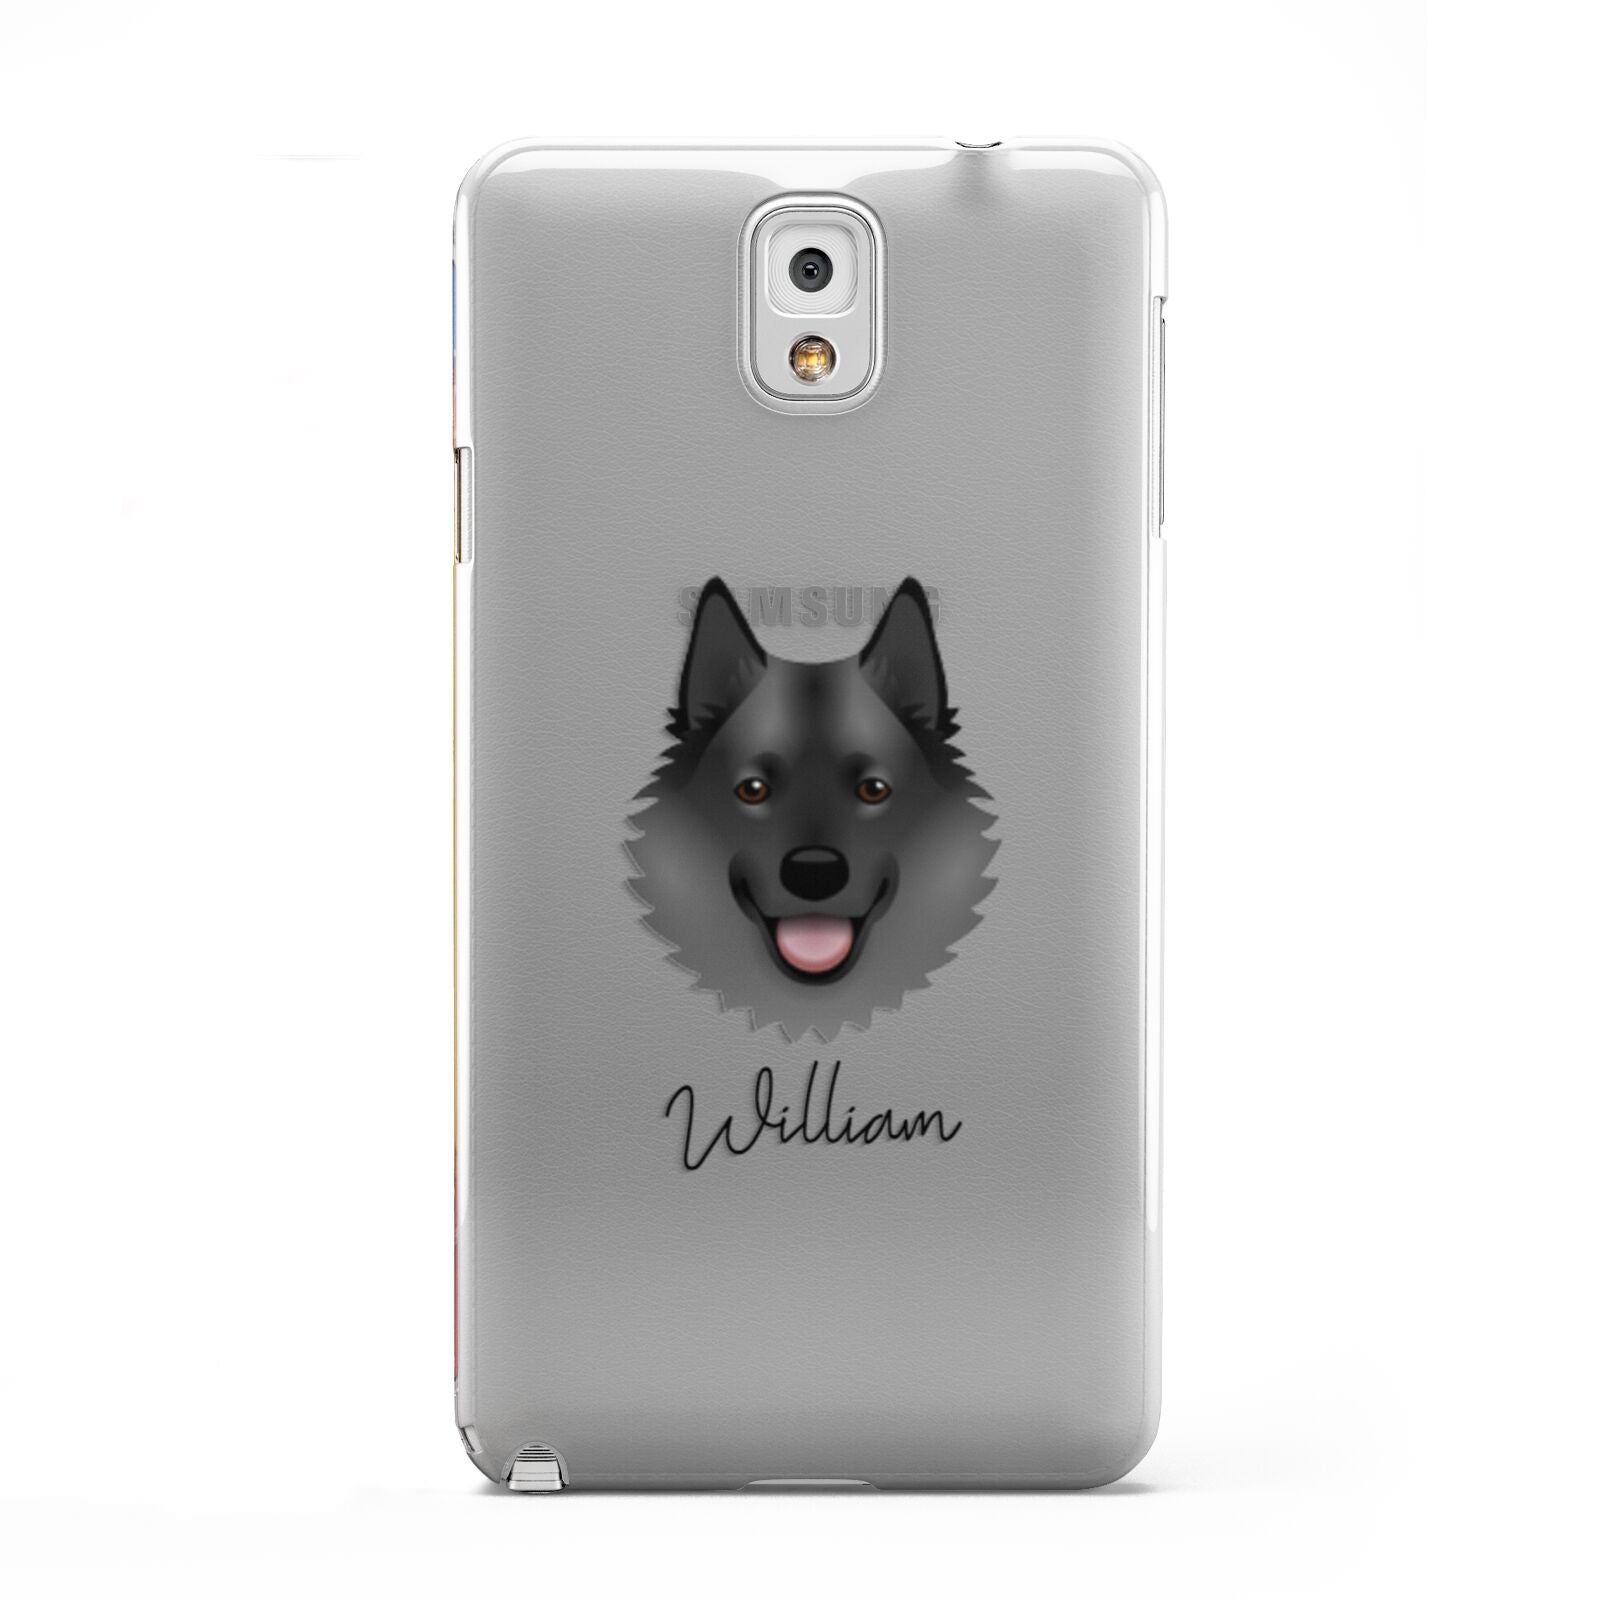 Norwegian Elkhound Personalised Samsung Galaxy Note 3 Case